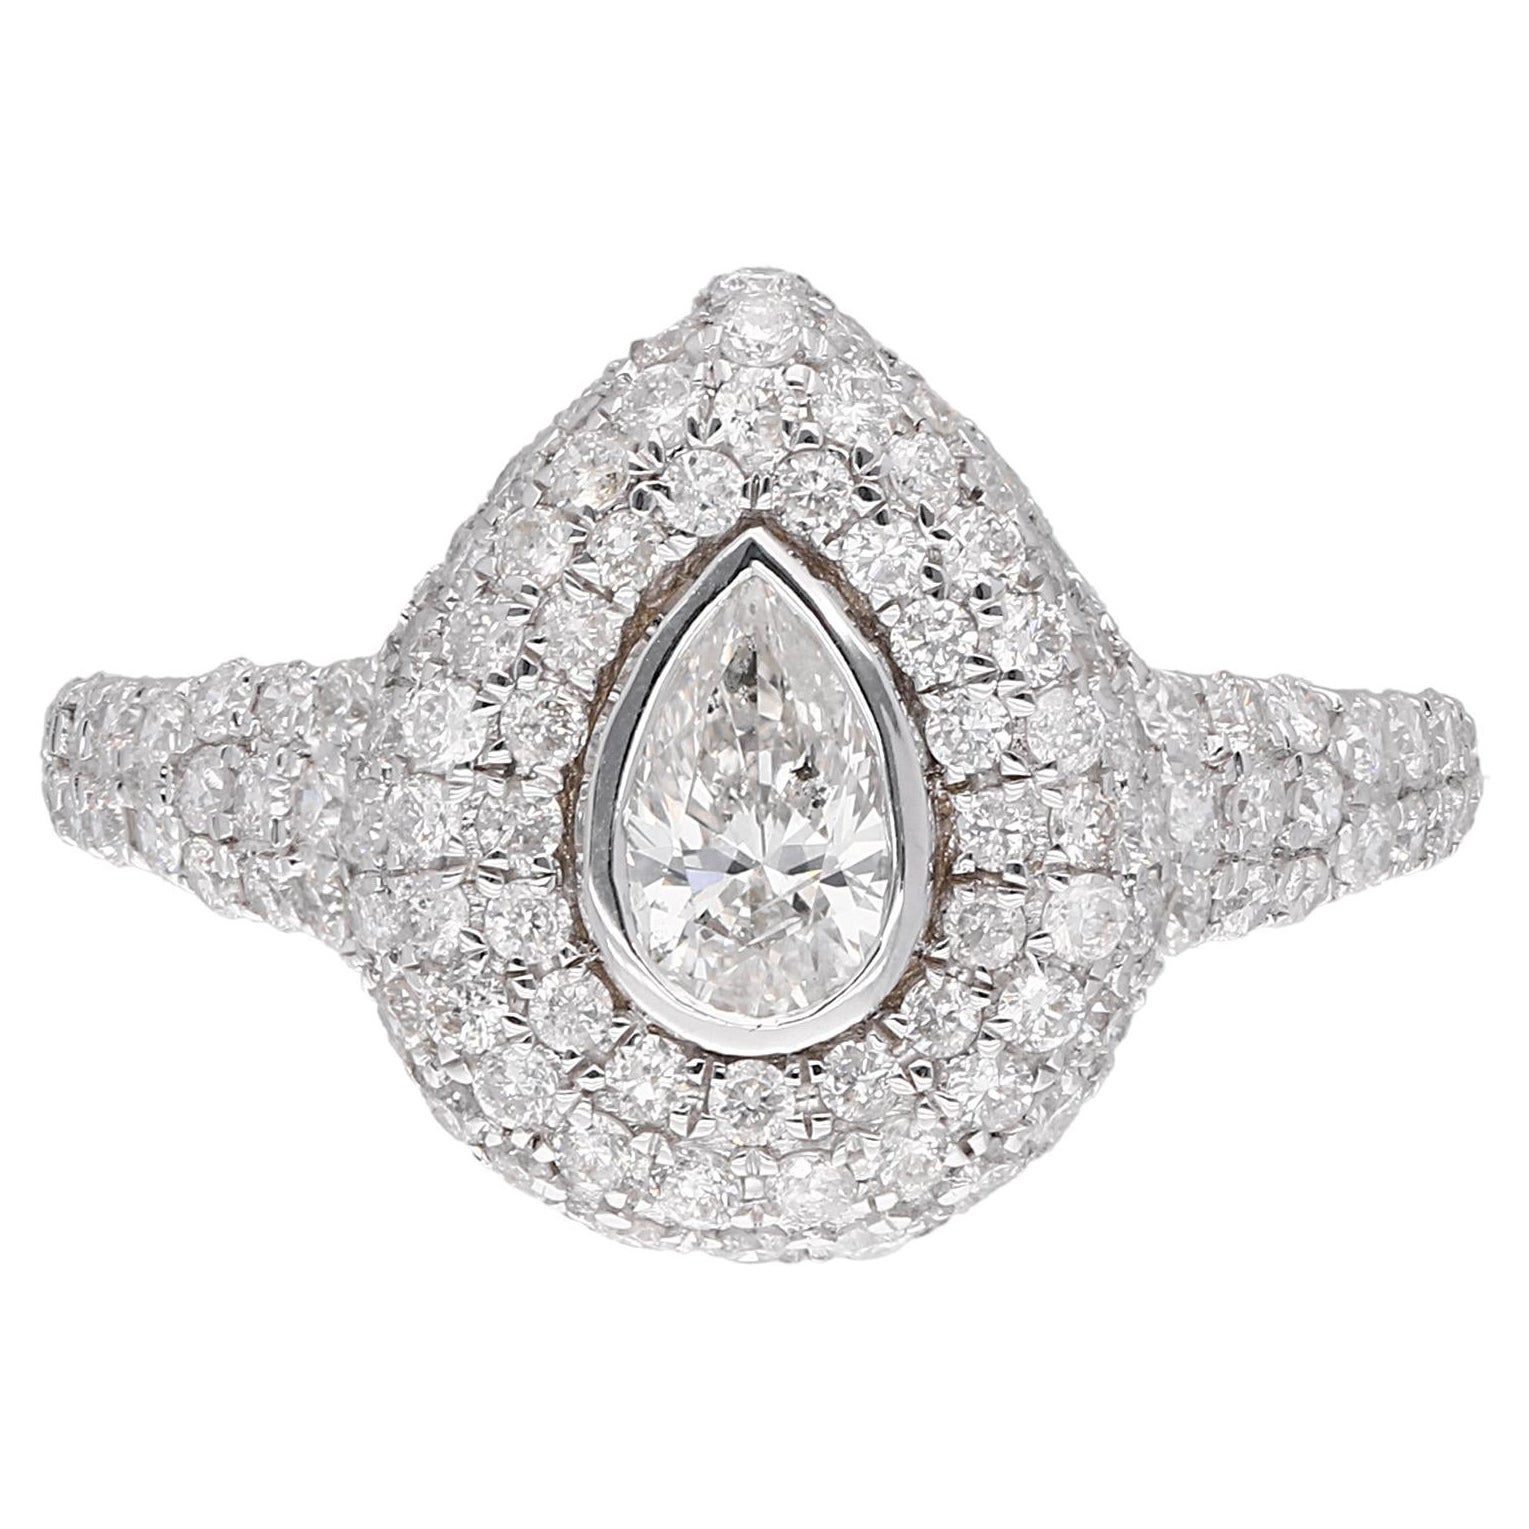 1.66 Carat Pear Diamond Studded Ring 18 Karat White Gold Handmade Fine Jewelry For Sale